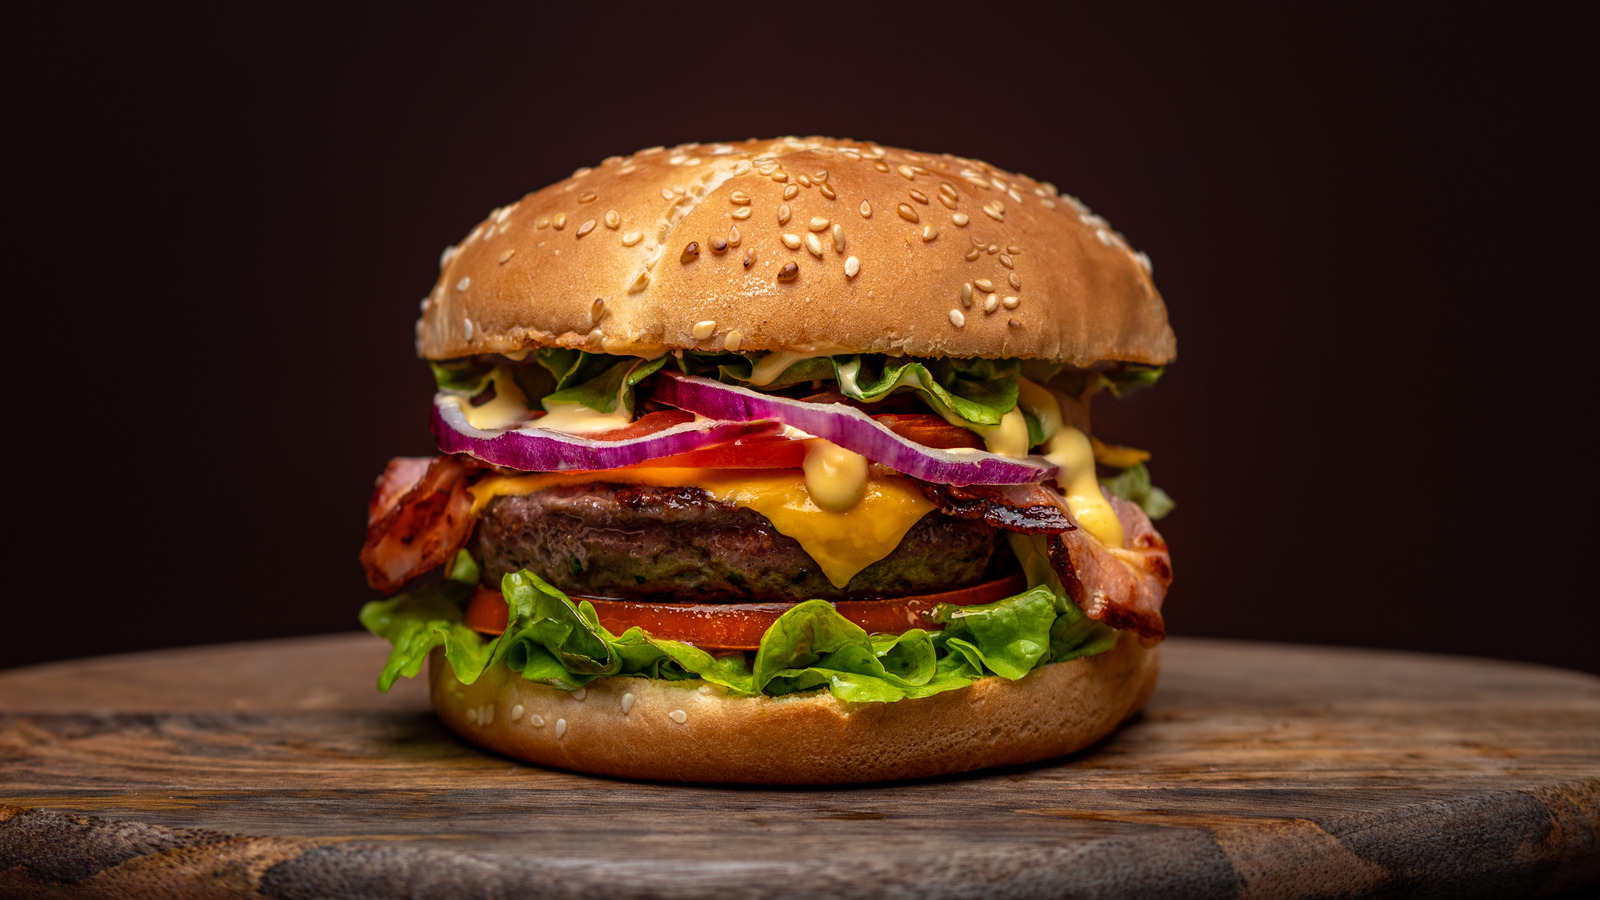 Top 10 Best Burger Brands In India In 2023. - Inventiva